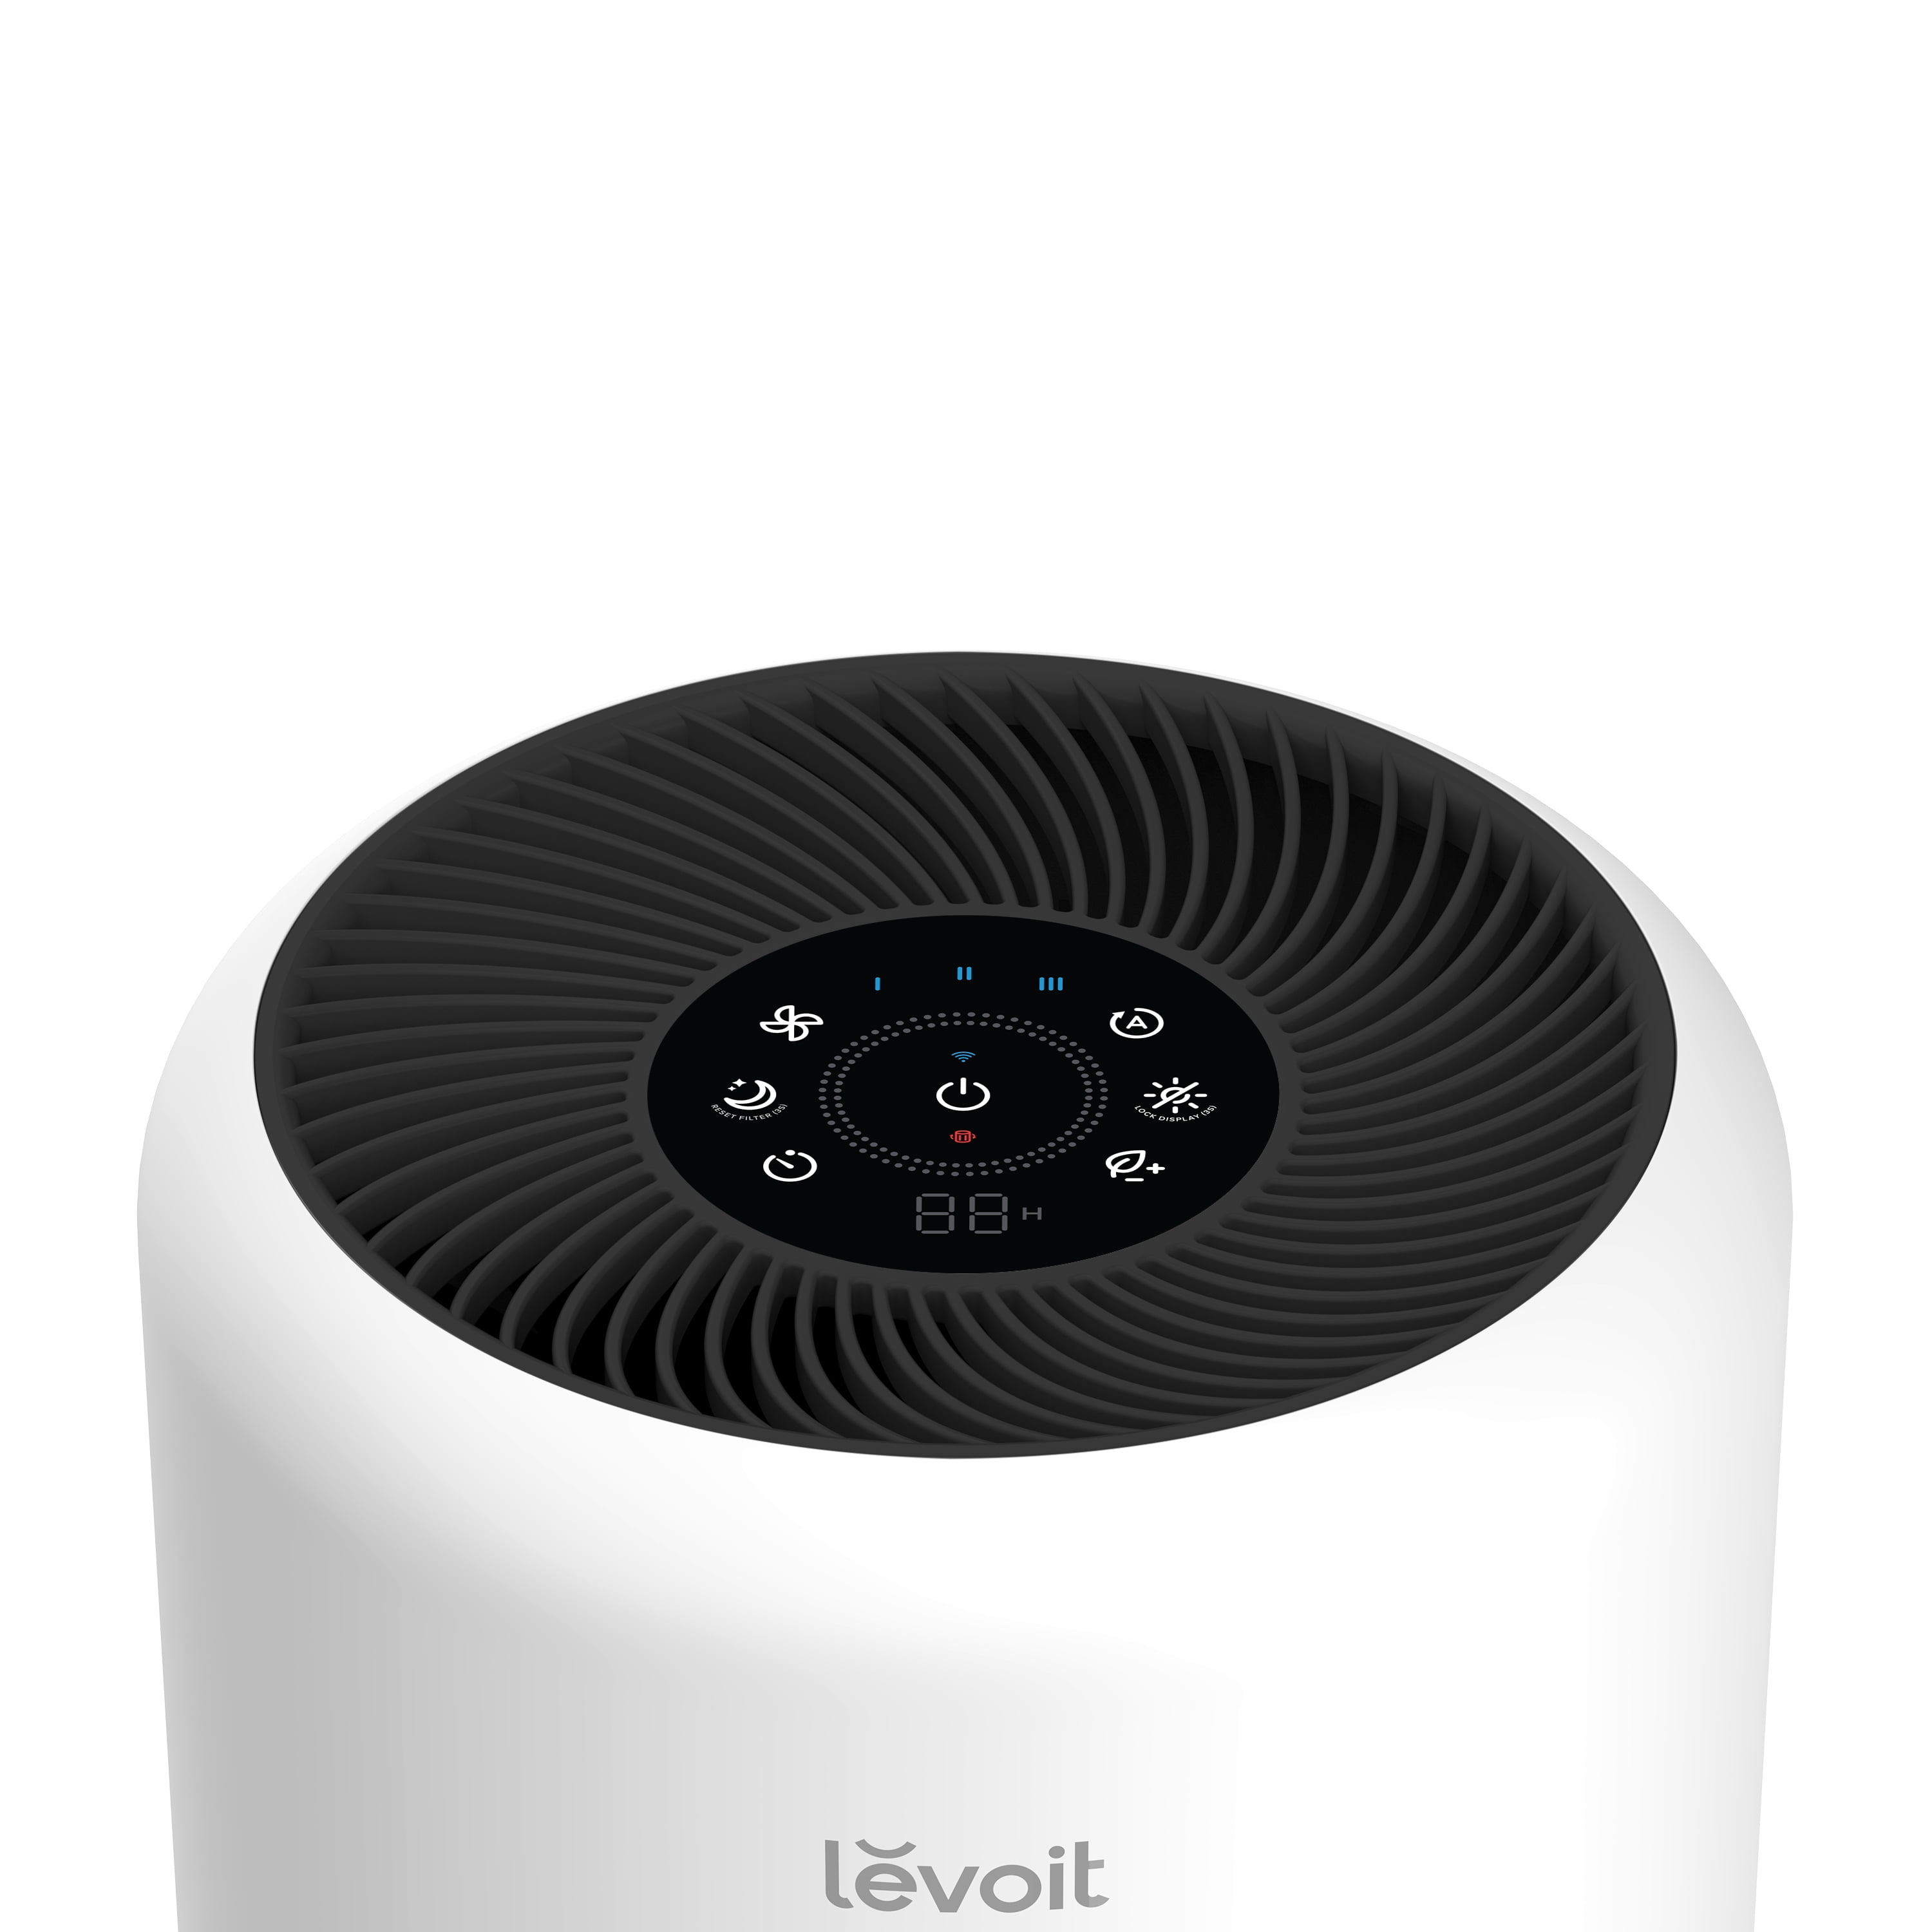 Levoit Core 300S Smart True HEPA Air Purifier - Winner Household